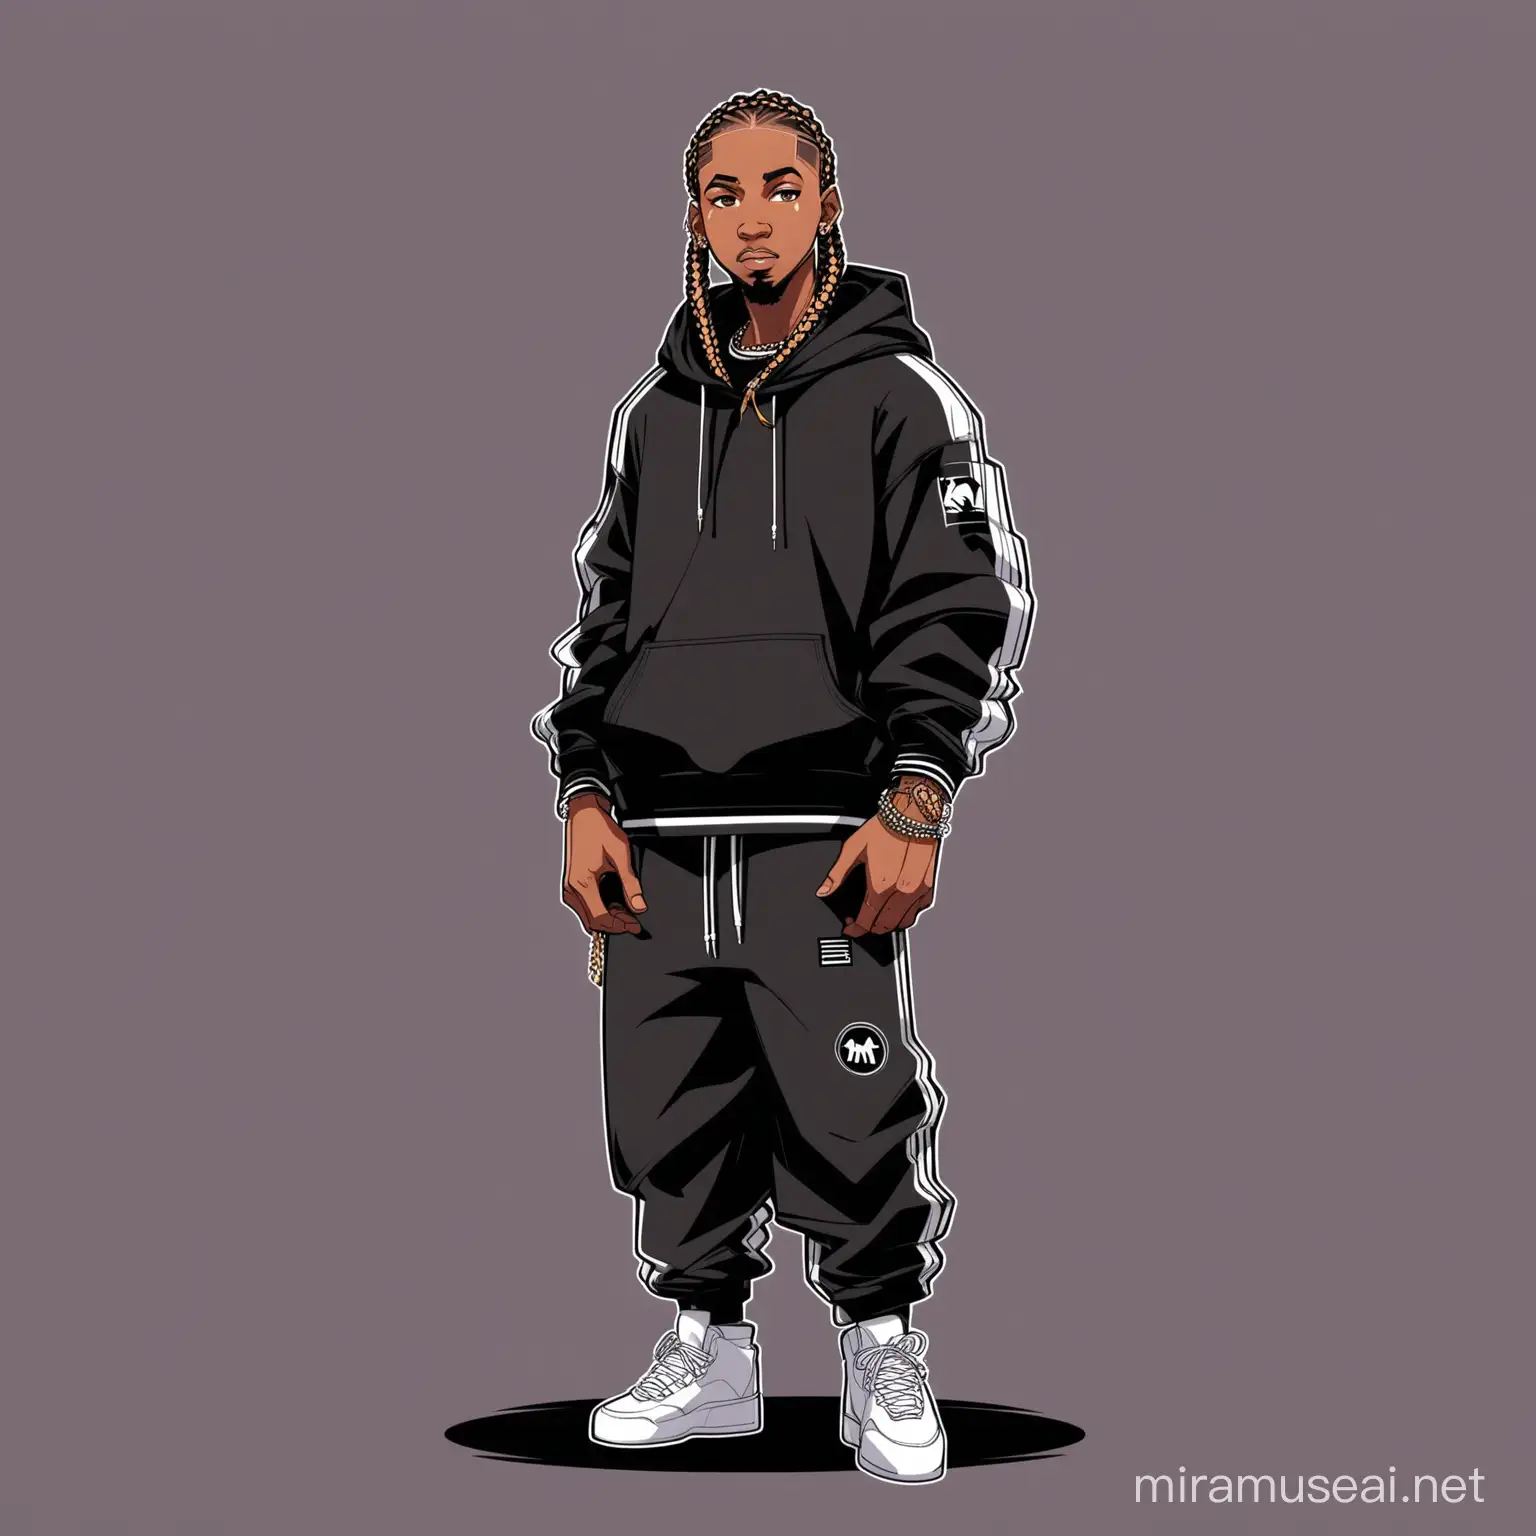 Animated Black Rapper with Cornrows Dynamic FullBody Portrait